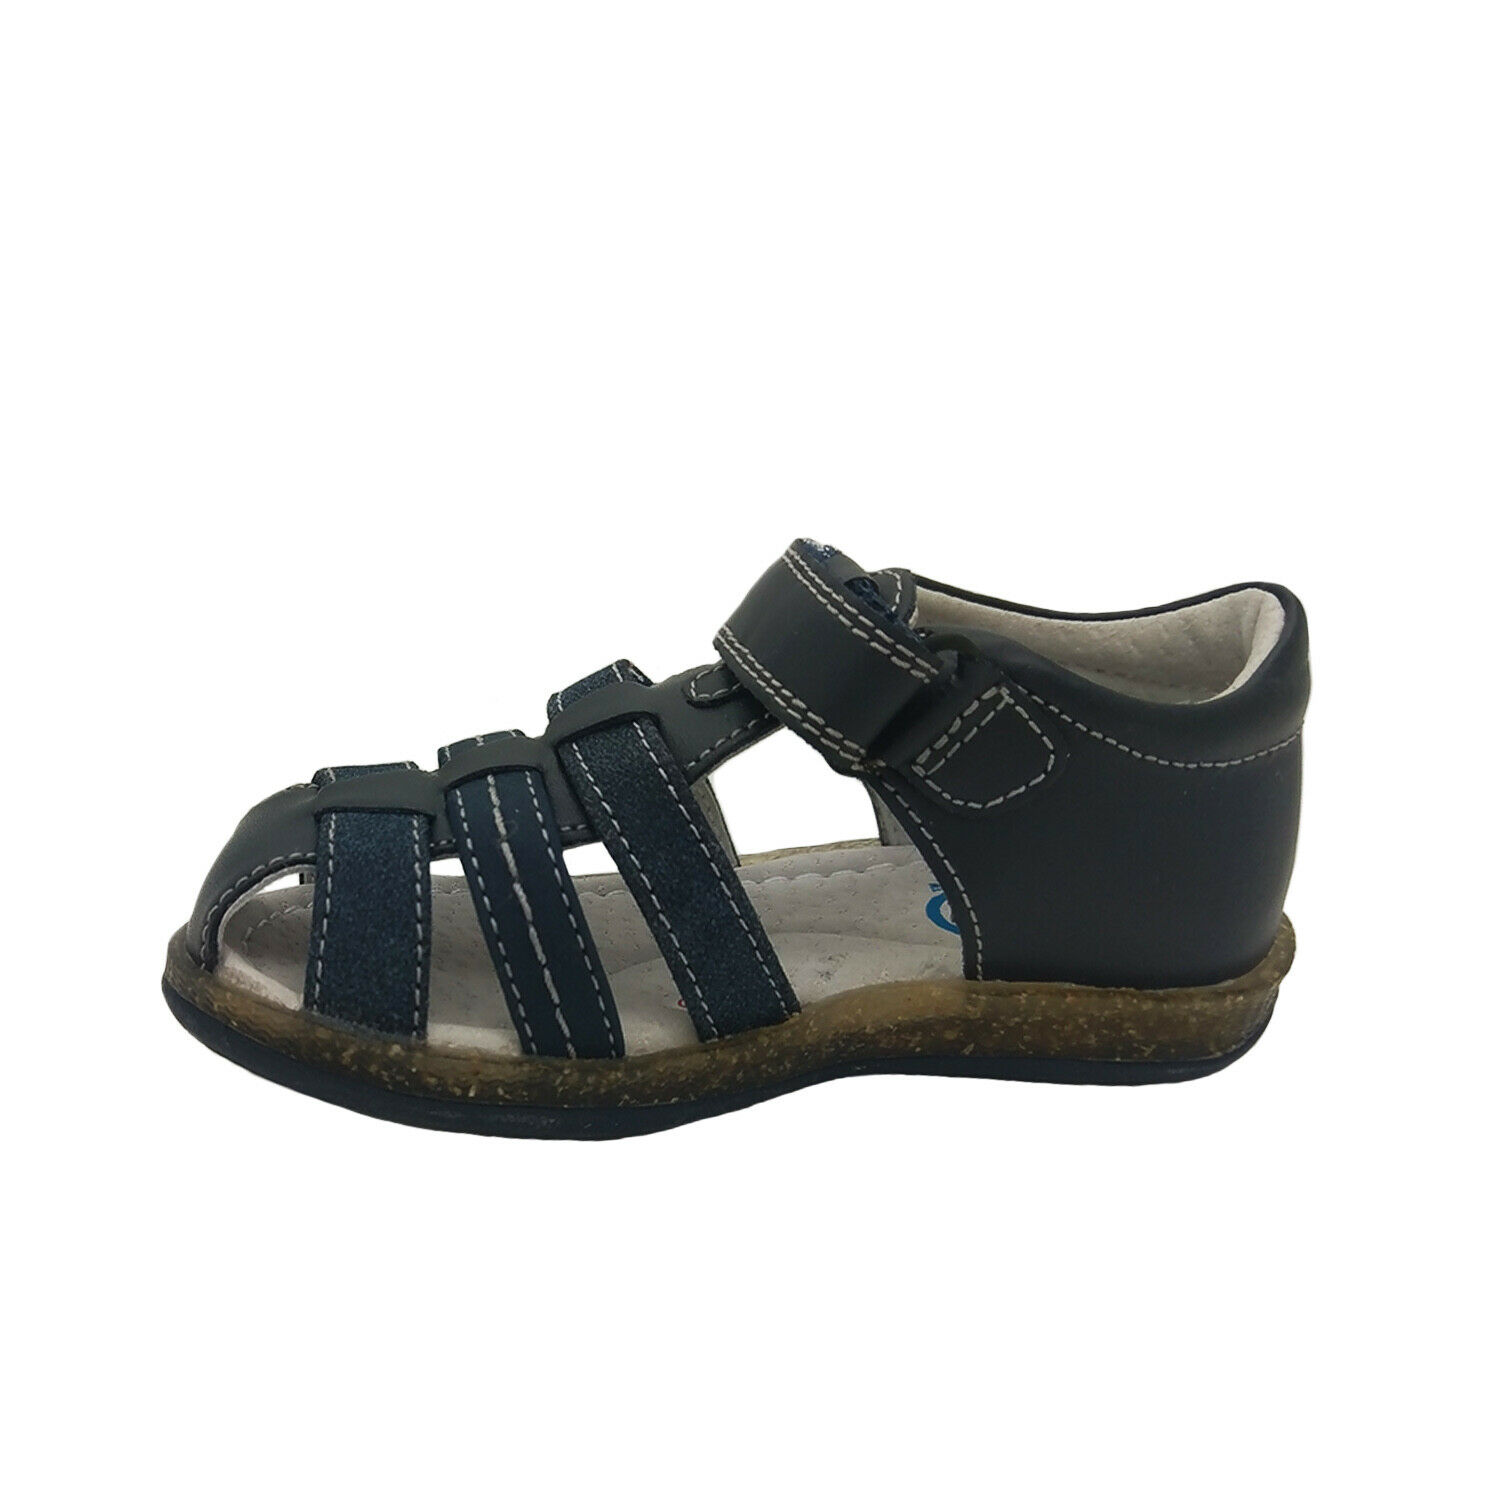 Boys Shoes Surefit Max Covered Toe Adjustable Leather Sandals EU Size ...